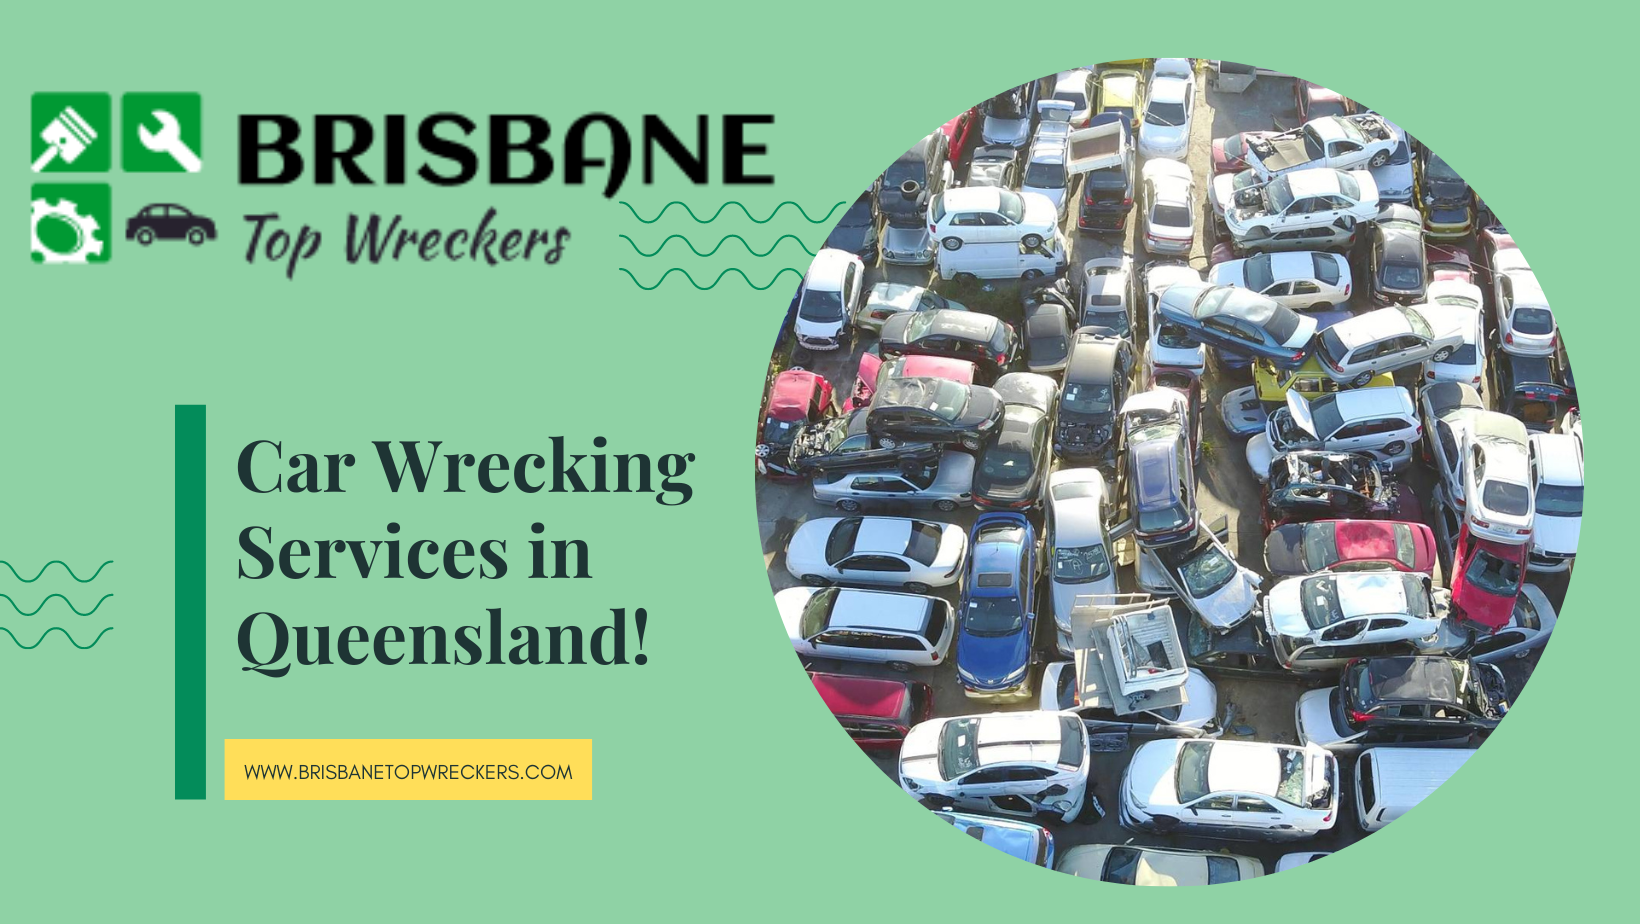 Car Wrecking Services in Queensland